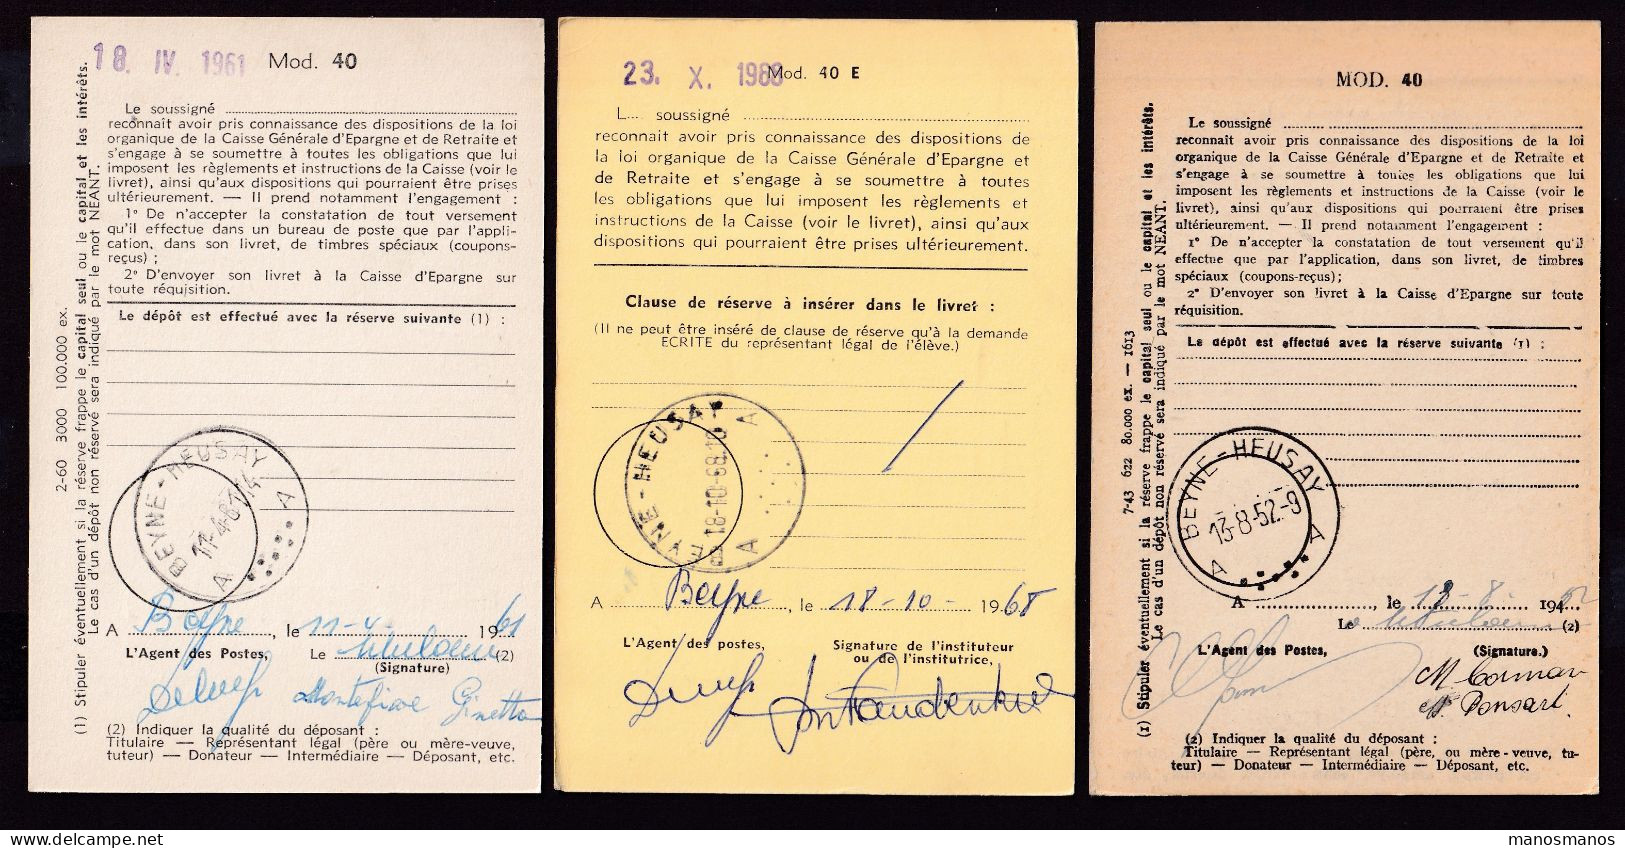 DDFF 552 -- BEYNE-HEUSAY - 3 X Carte De Caisse D'Epargne Postale/Postspaarkaskaart 1952/1968 - 2 X Grande Griffe - Franquicia